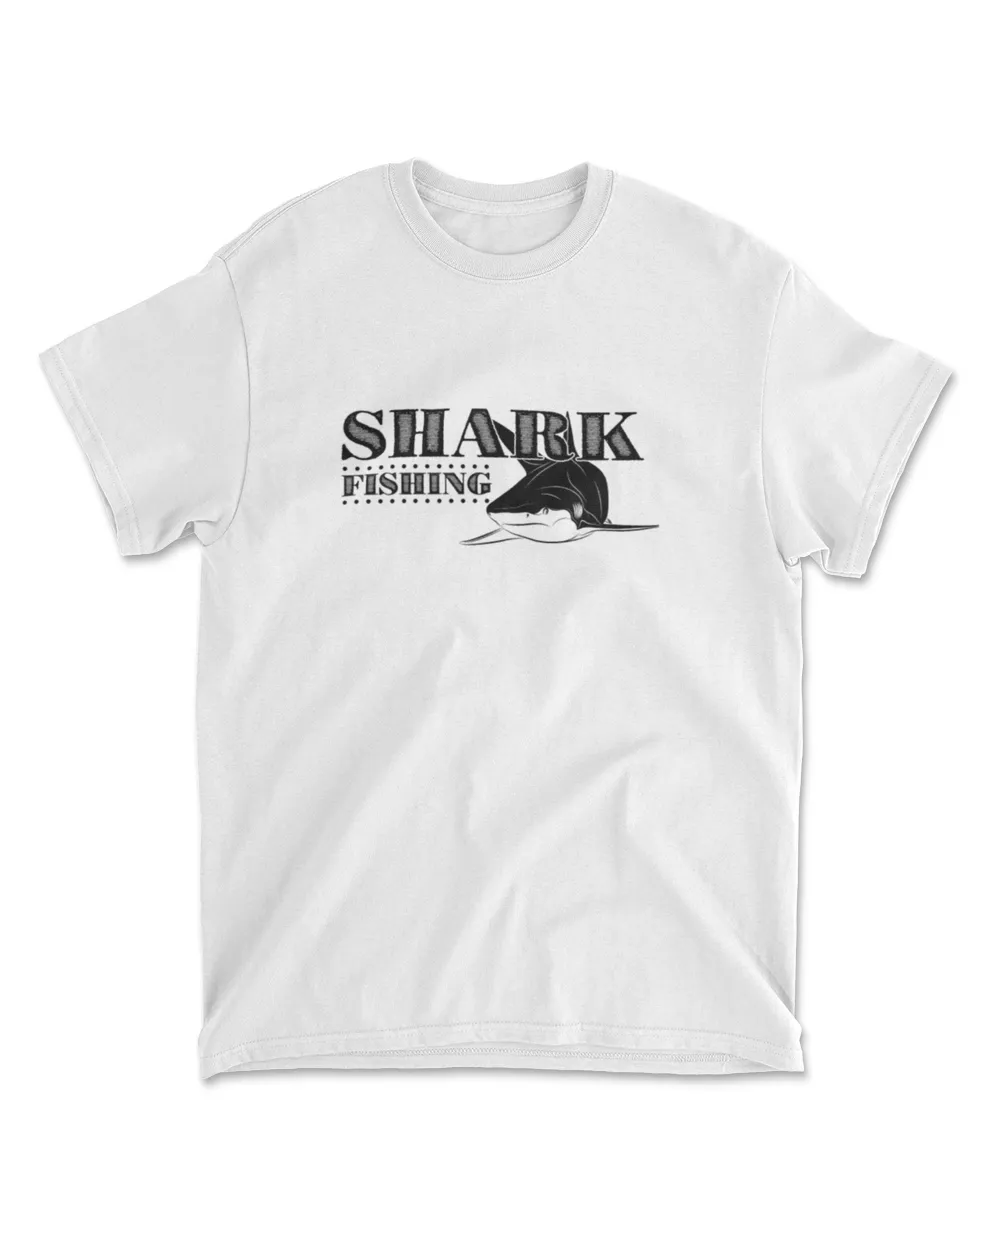 Shark Fishing Love Shirt